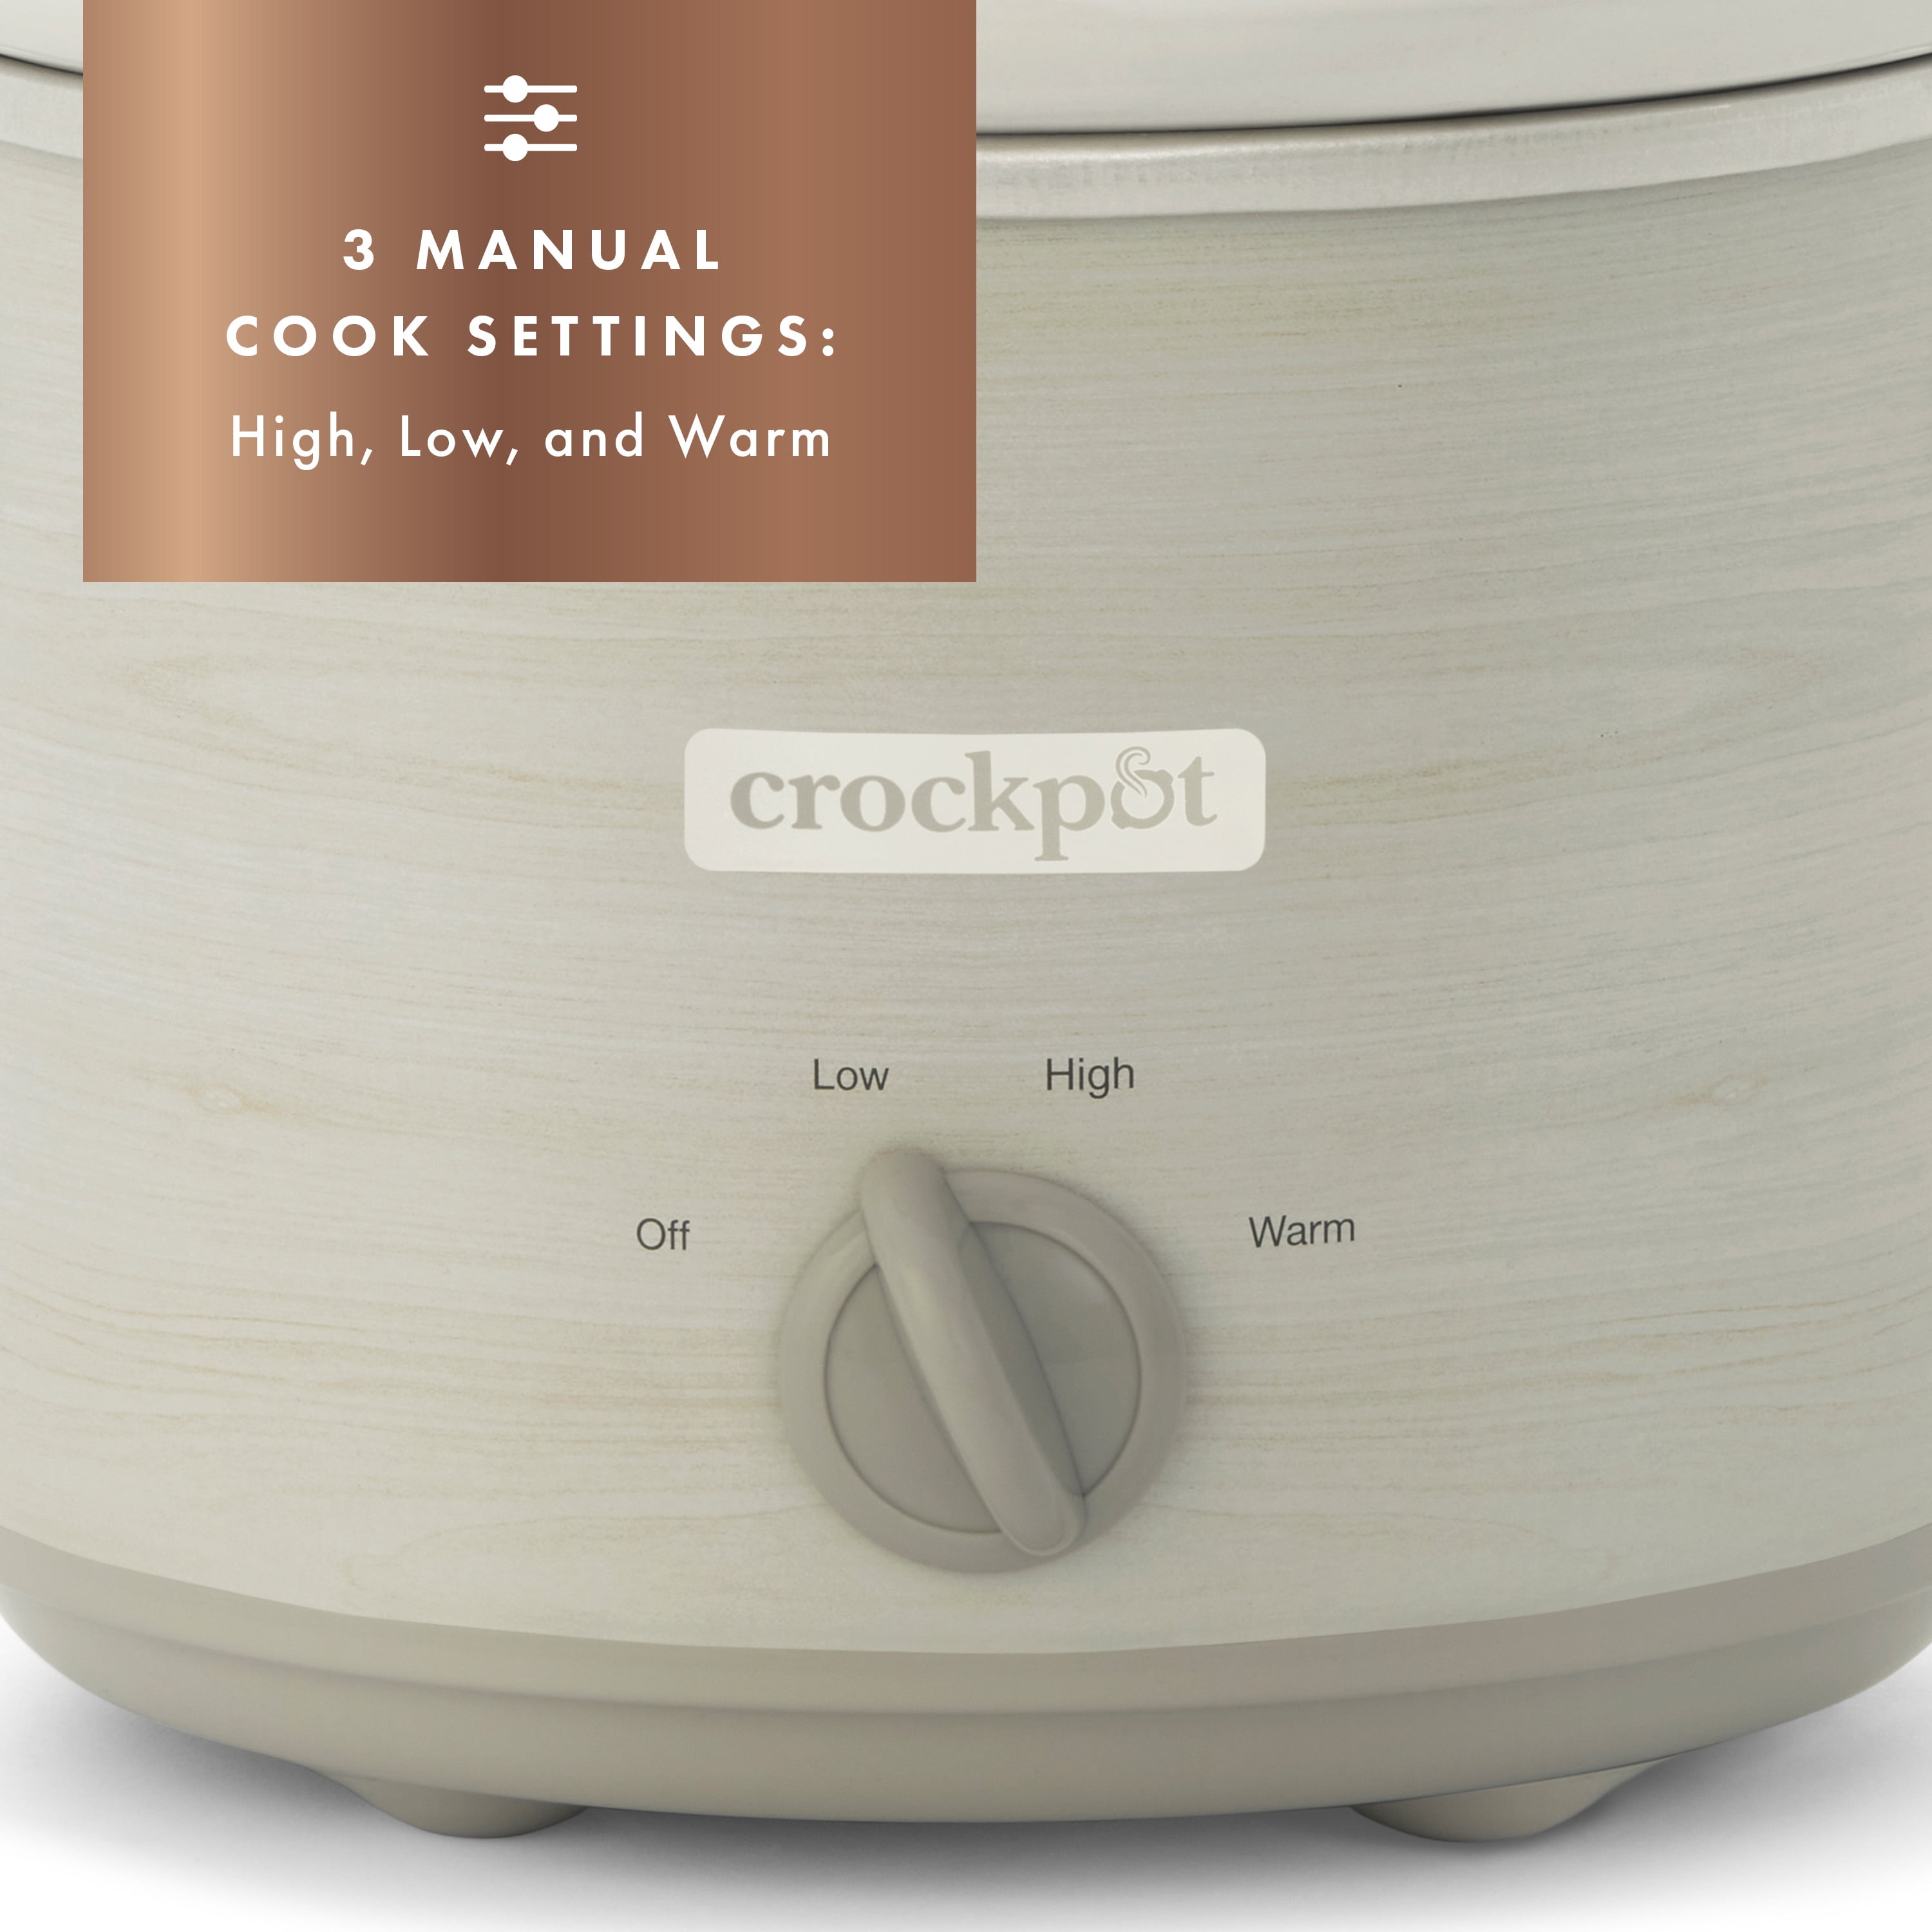 180 Crockpot® Products ideas